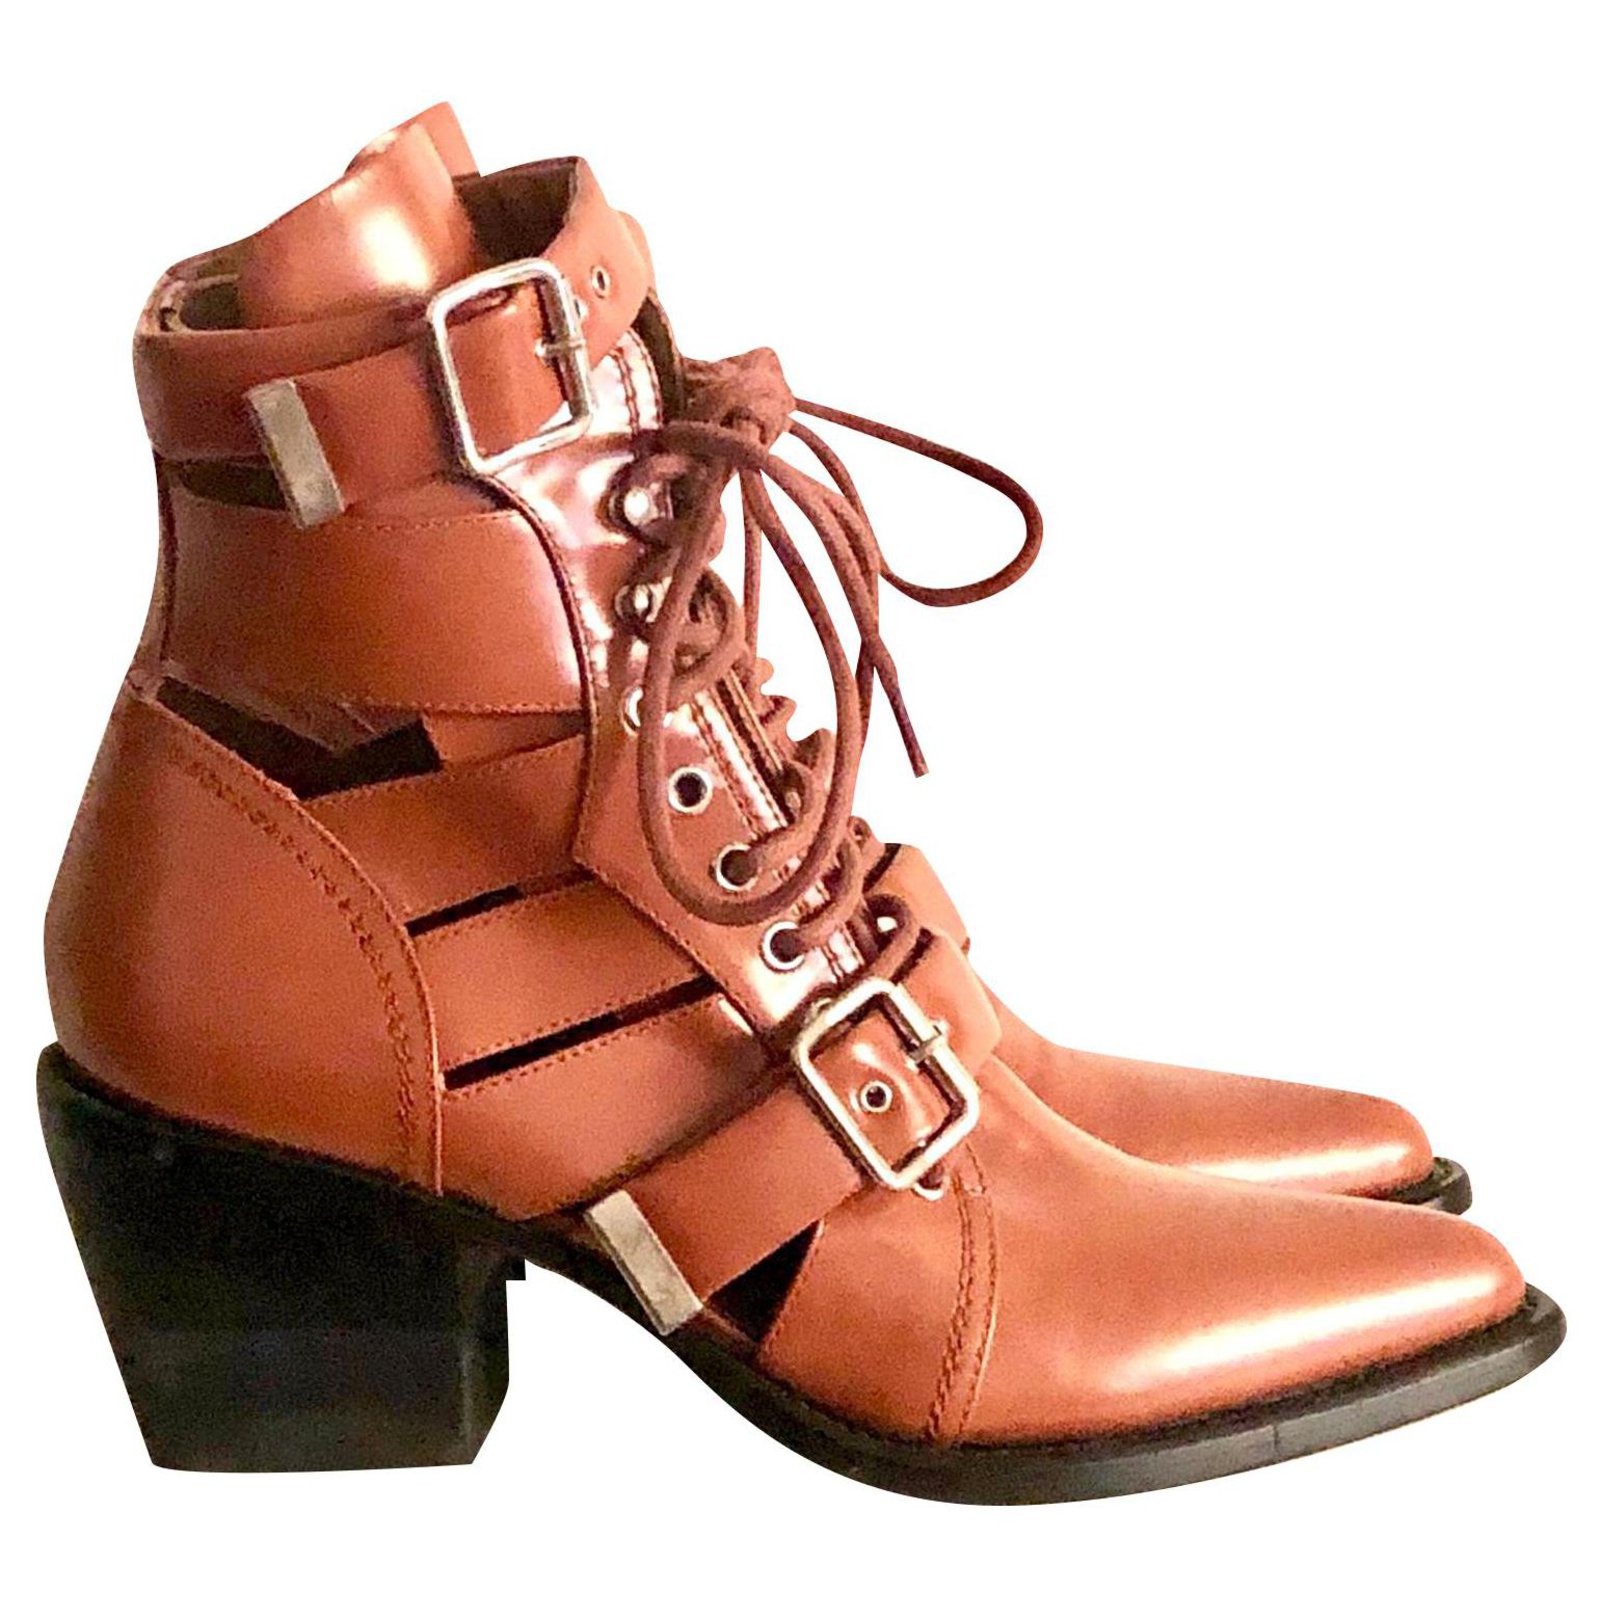 Buy > brown chloe boots > in stock